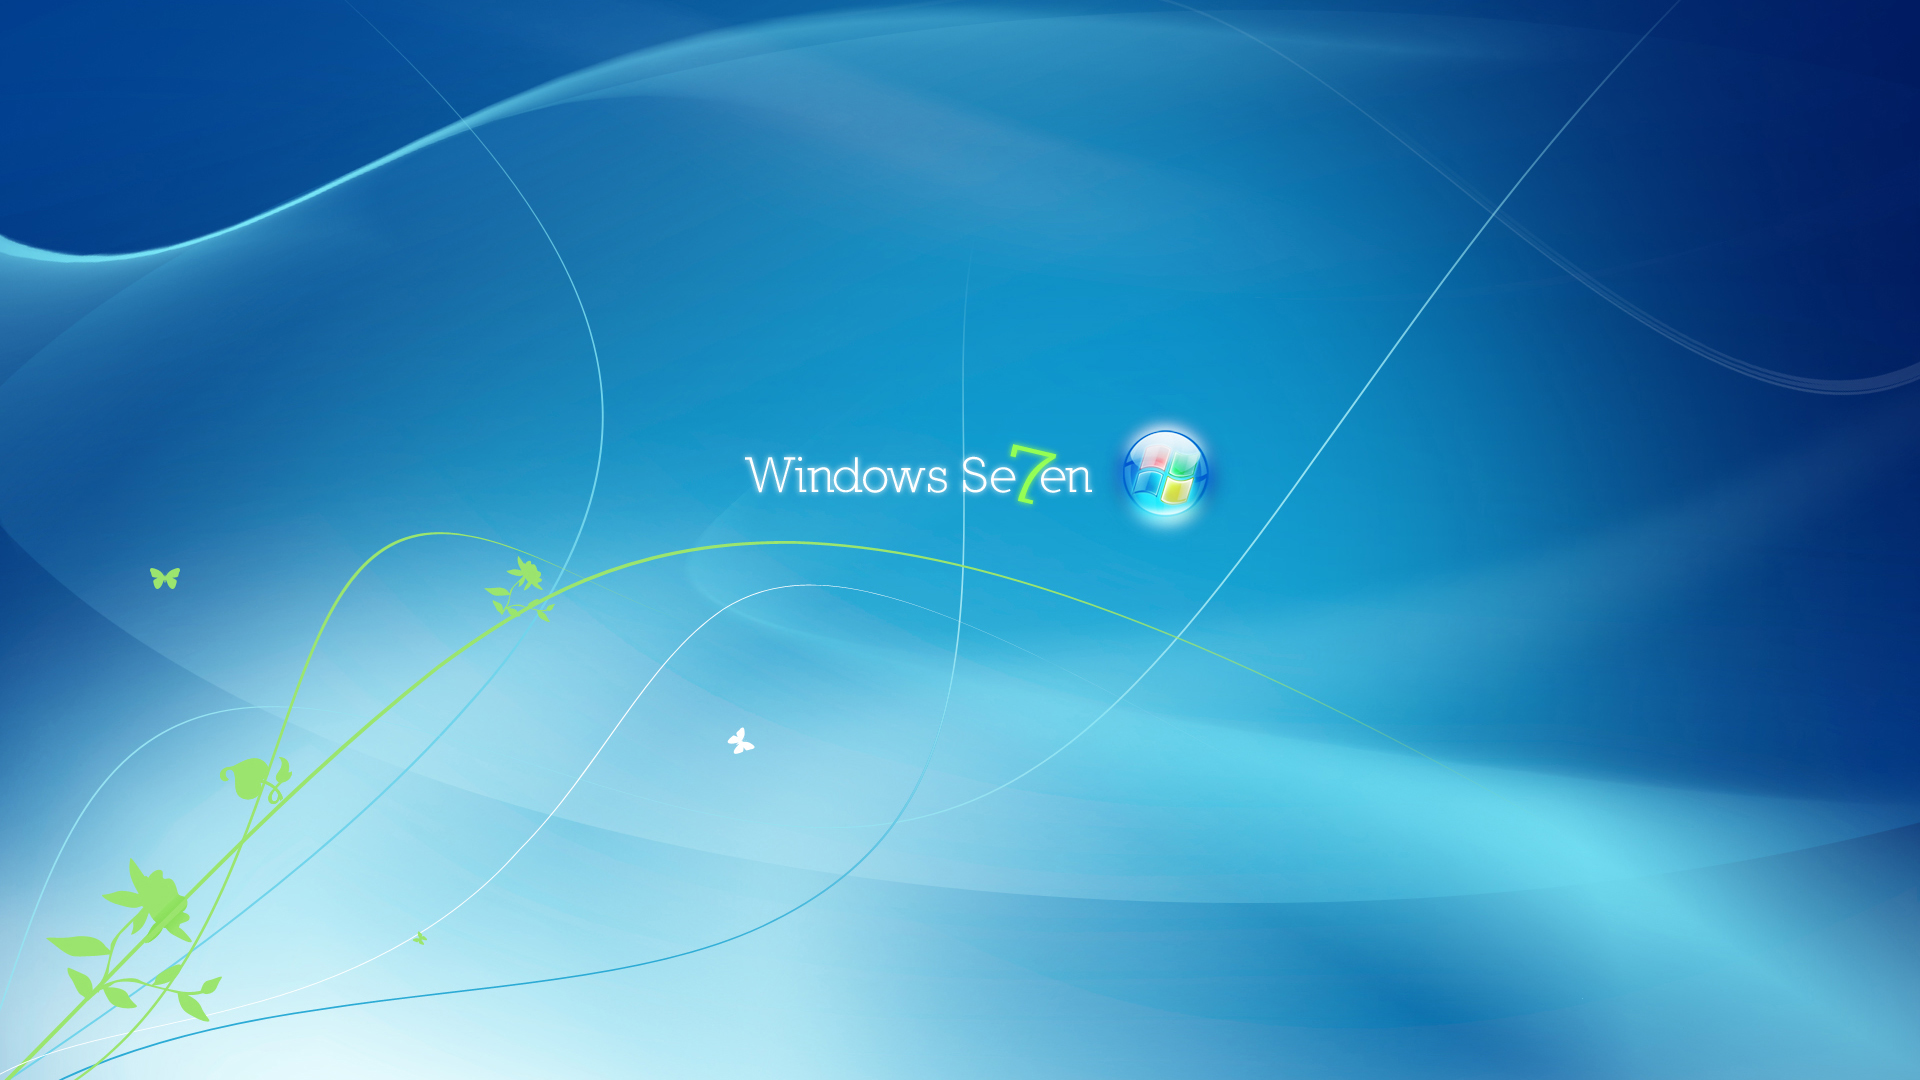 Windows Seven - Wallpaper, High Definition, High Quality ...